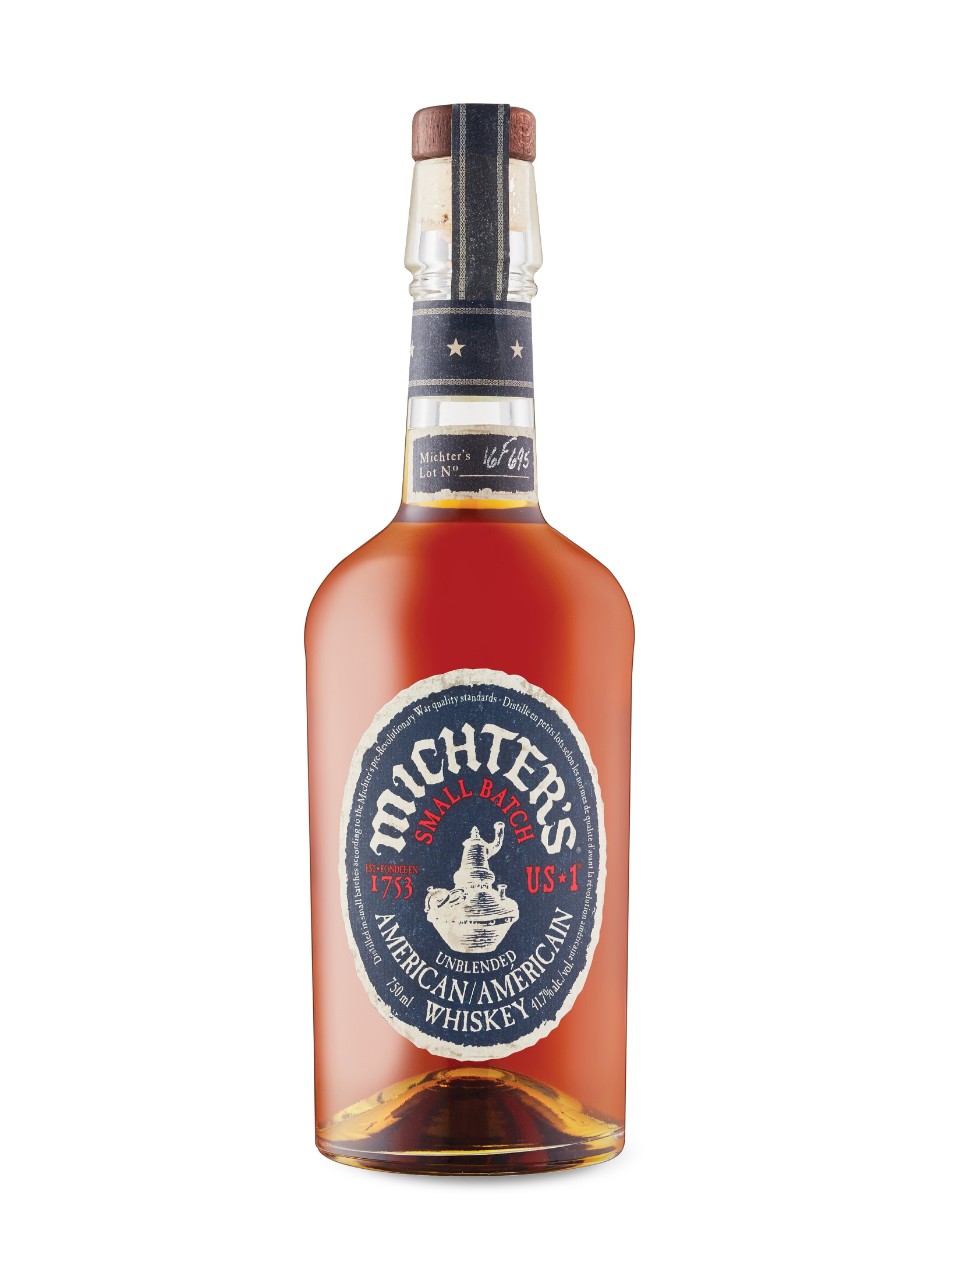 Michter's Us1 Small Batch Unblended Bourbon